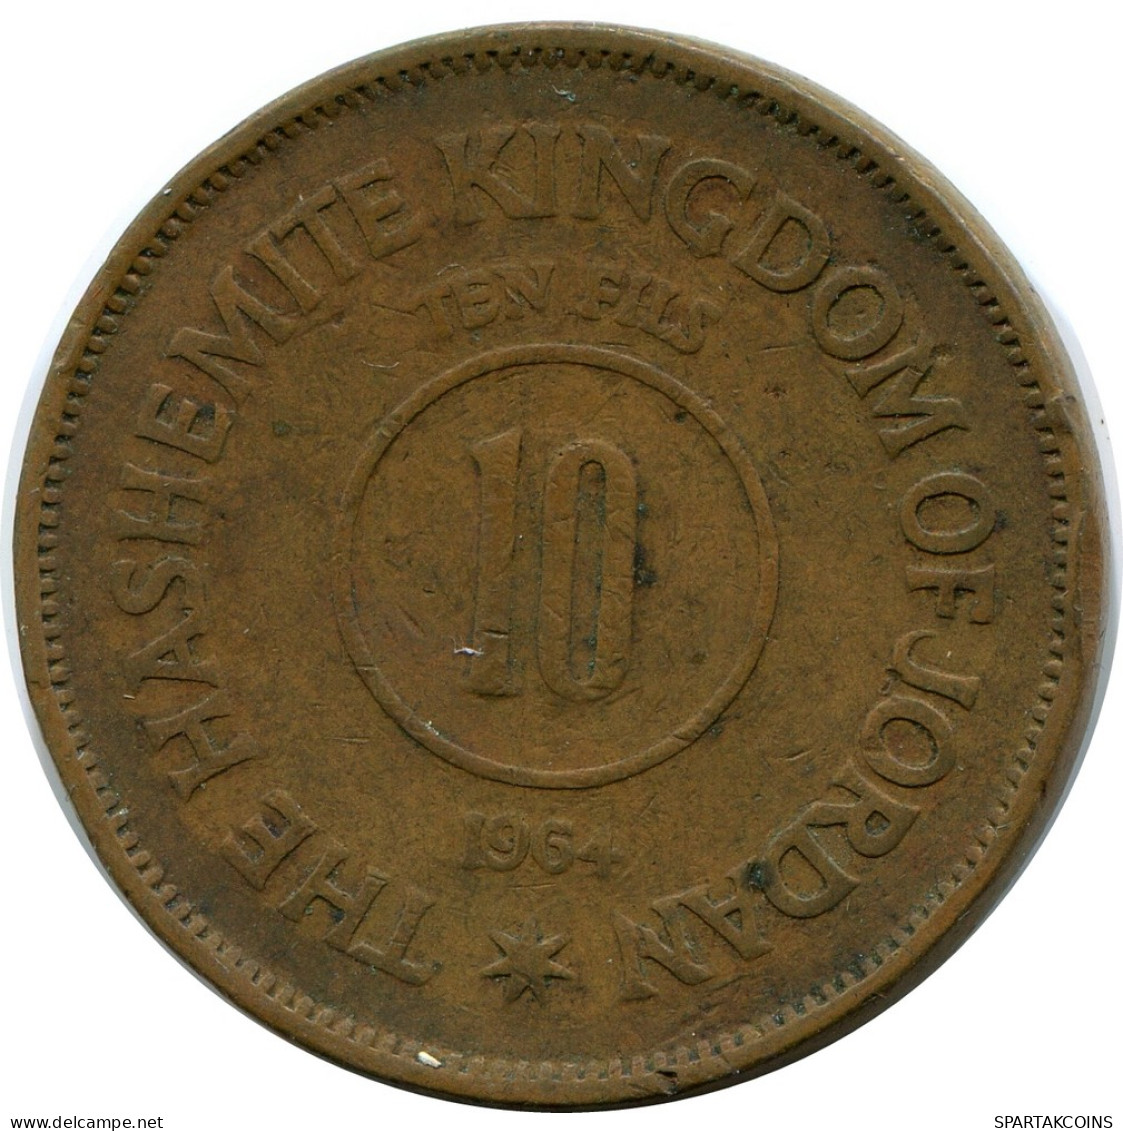 10 FILS 1964 JORDAN Coin #AP111.U - Jordanie